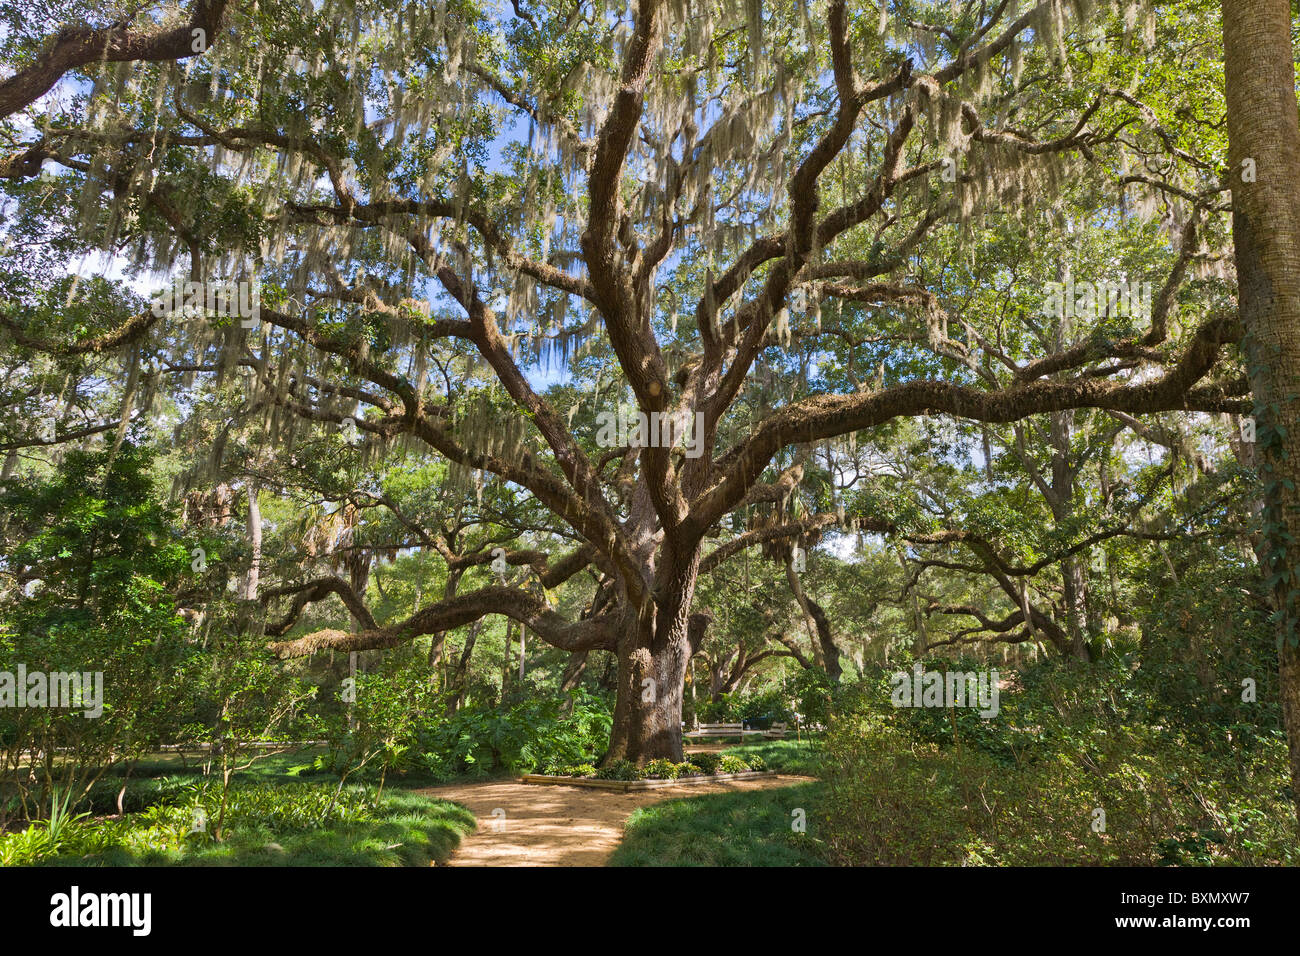 Large Live Oak tree in Washington Oaks Gardens State Park on the East Coast of Florida Stock Photo